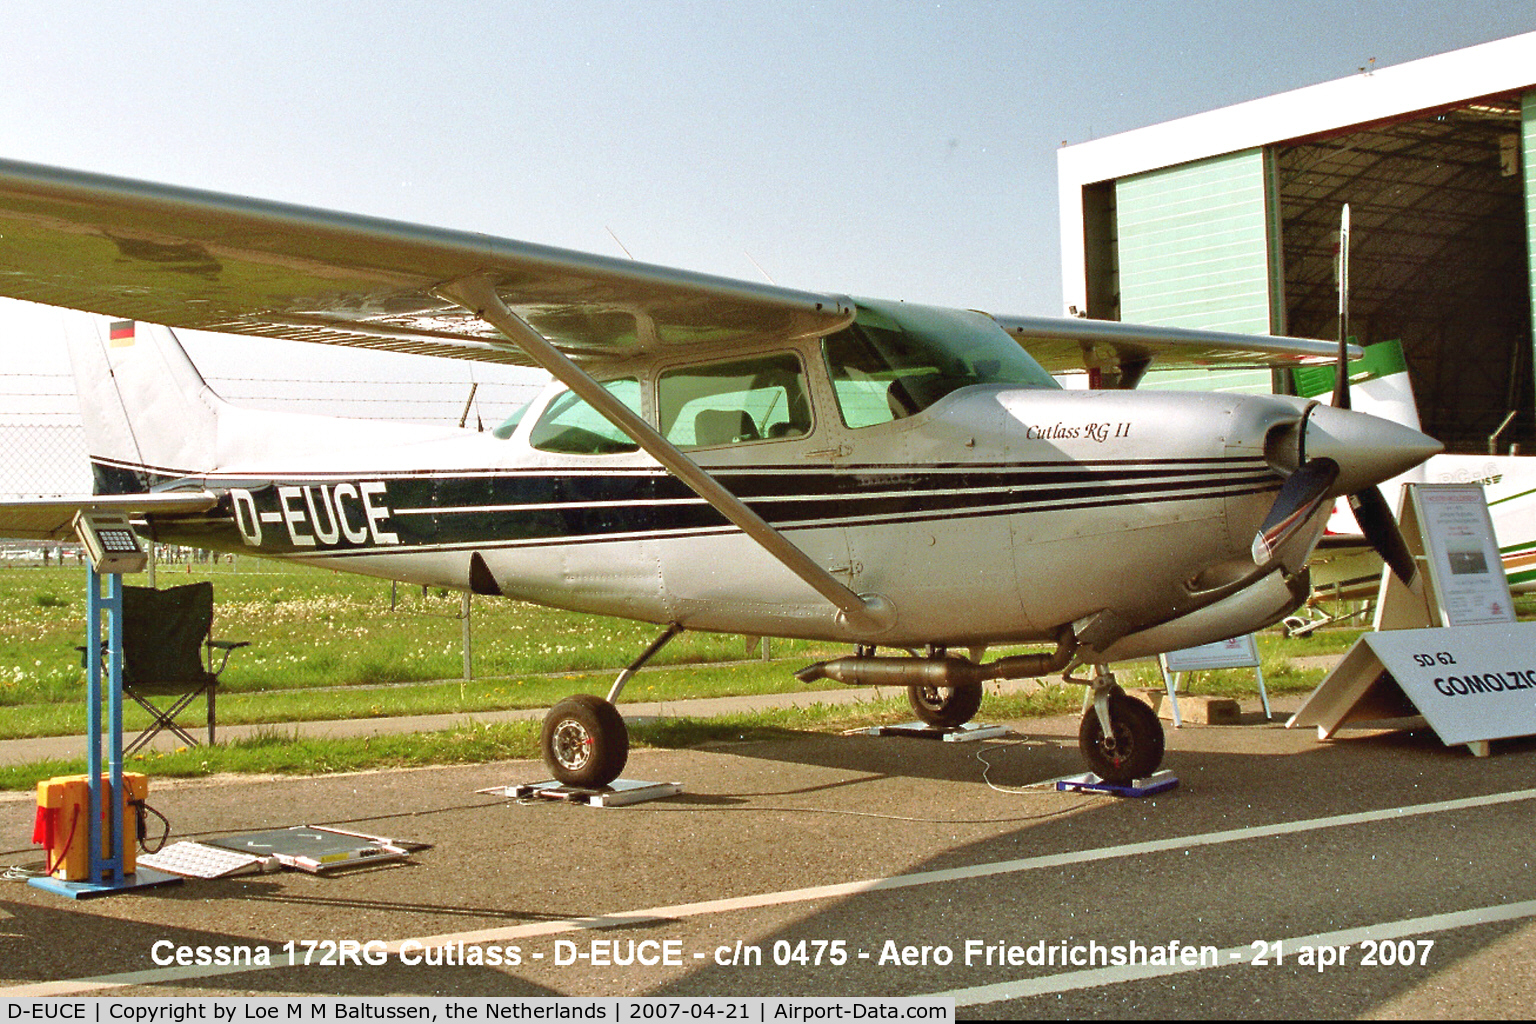 D-EUCE, Cessna 172RG Cutlass RG C/N 172RG0475 ?, friedrichshafen Airport, Germany